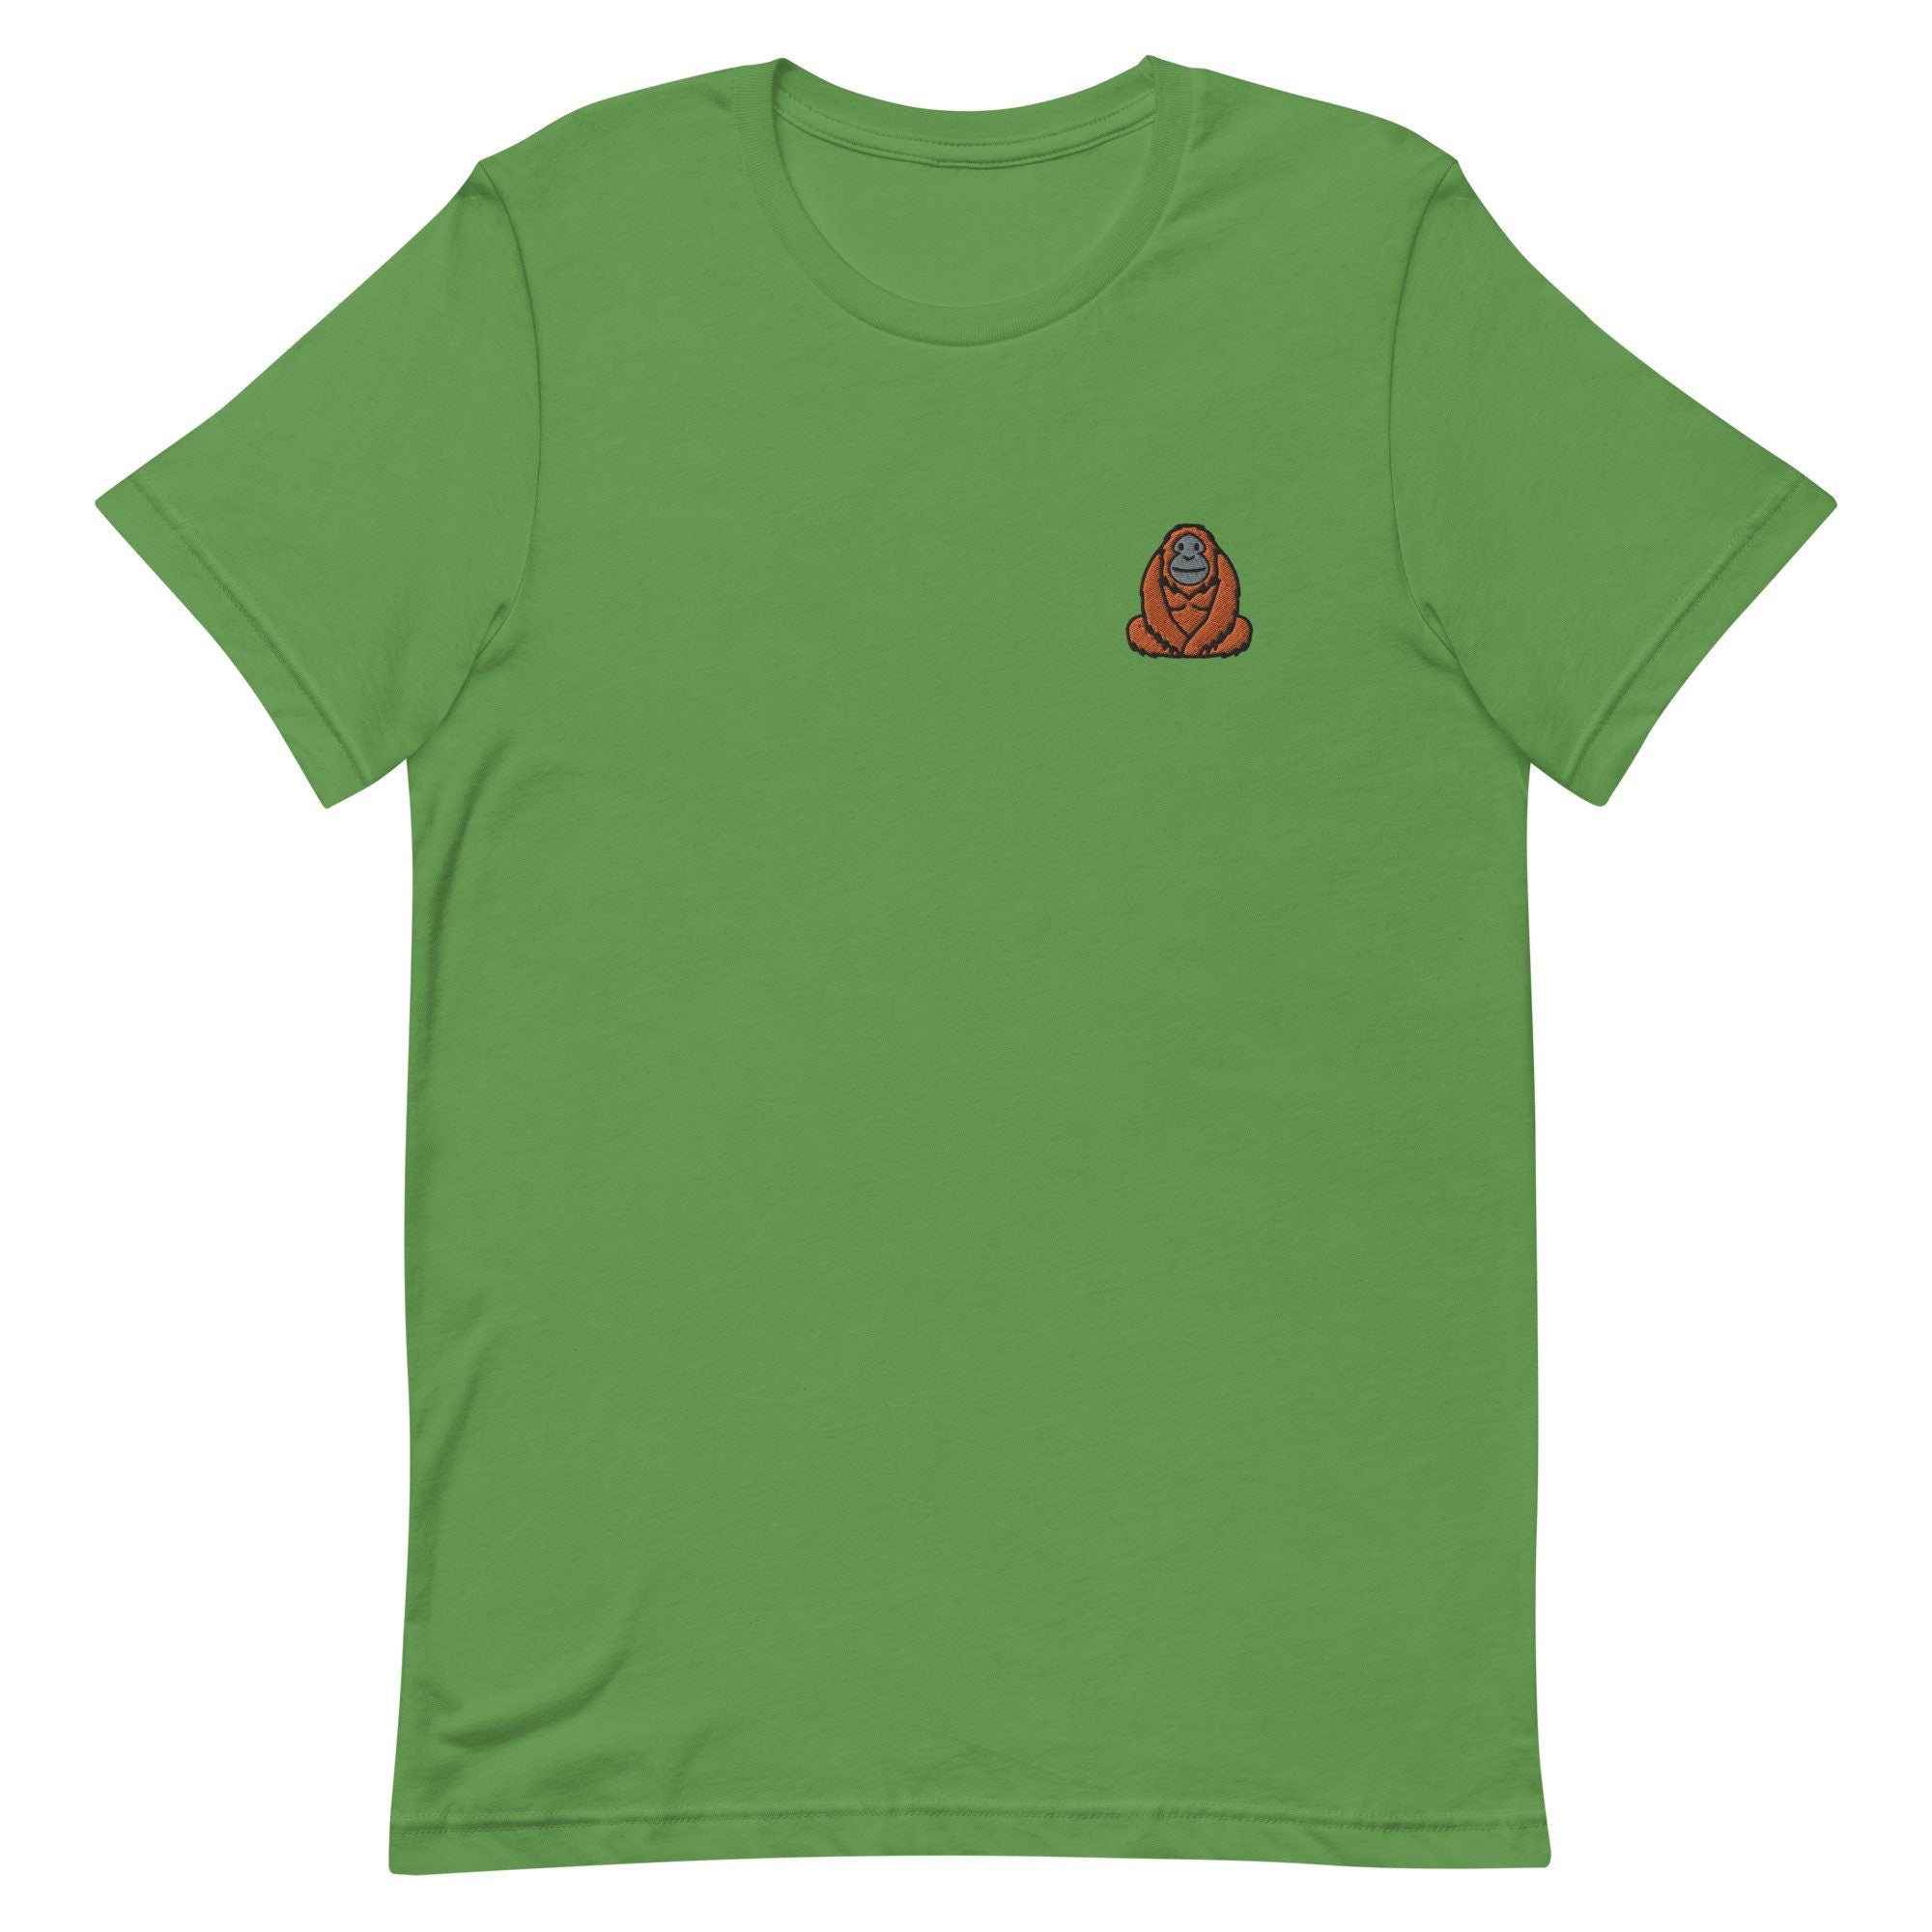 Orangutan Premium Men's T-Shirt, Embroidered Men's T-Shirt Gift for Boyfriend, Men's Short Sleeve Shirt - Multiple Colors